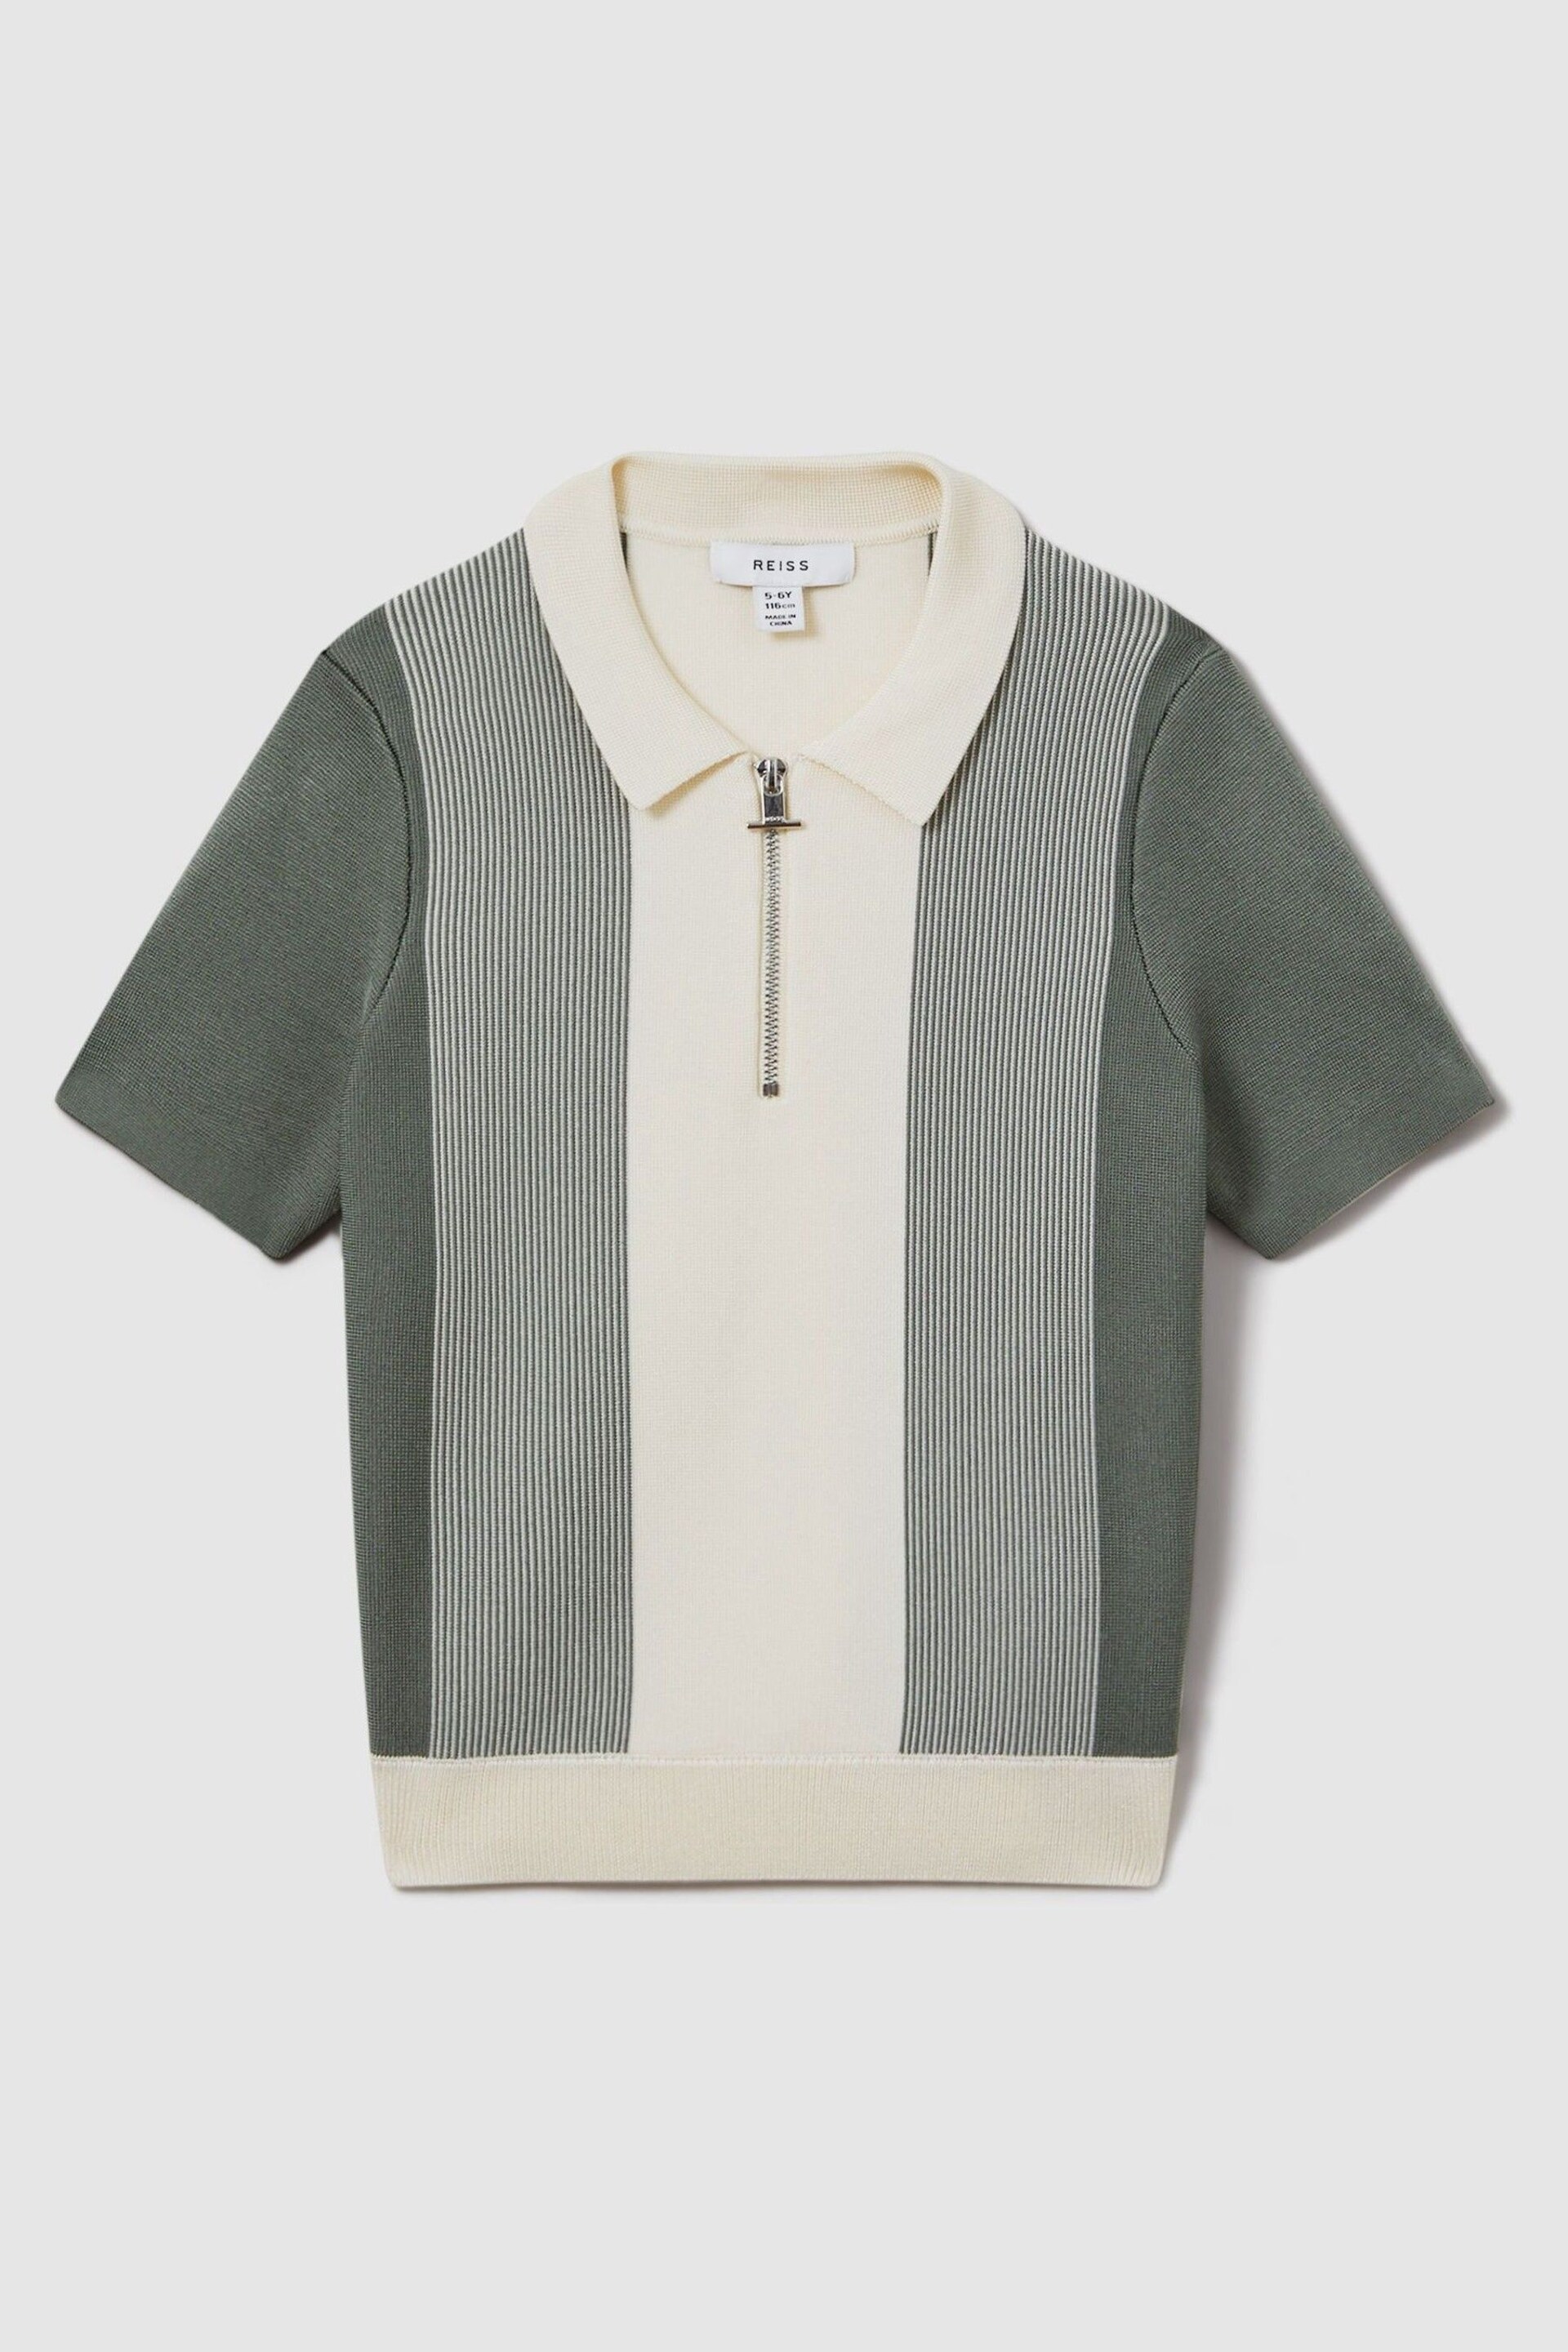 Reiss Sage Milton Junior Half-Zip Striped Polo Shirt - Image 2 of 4